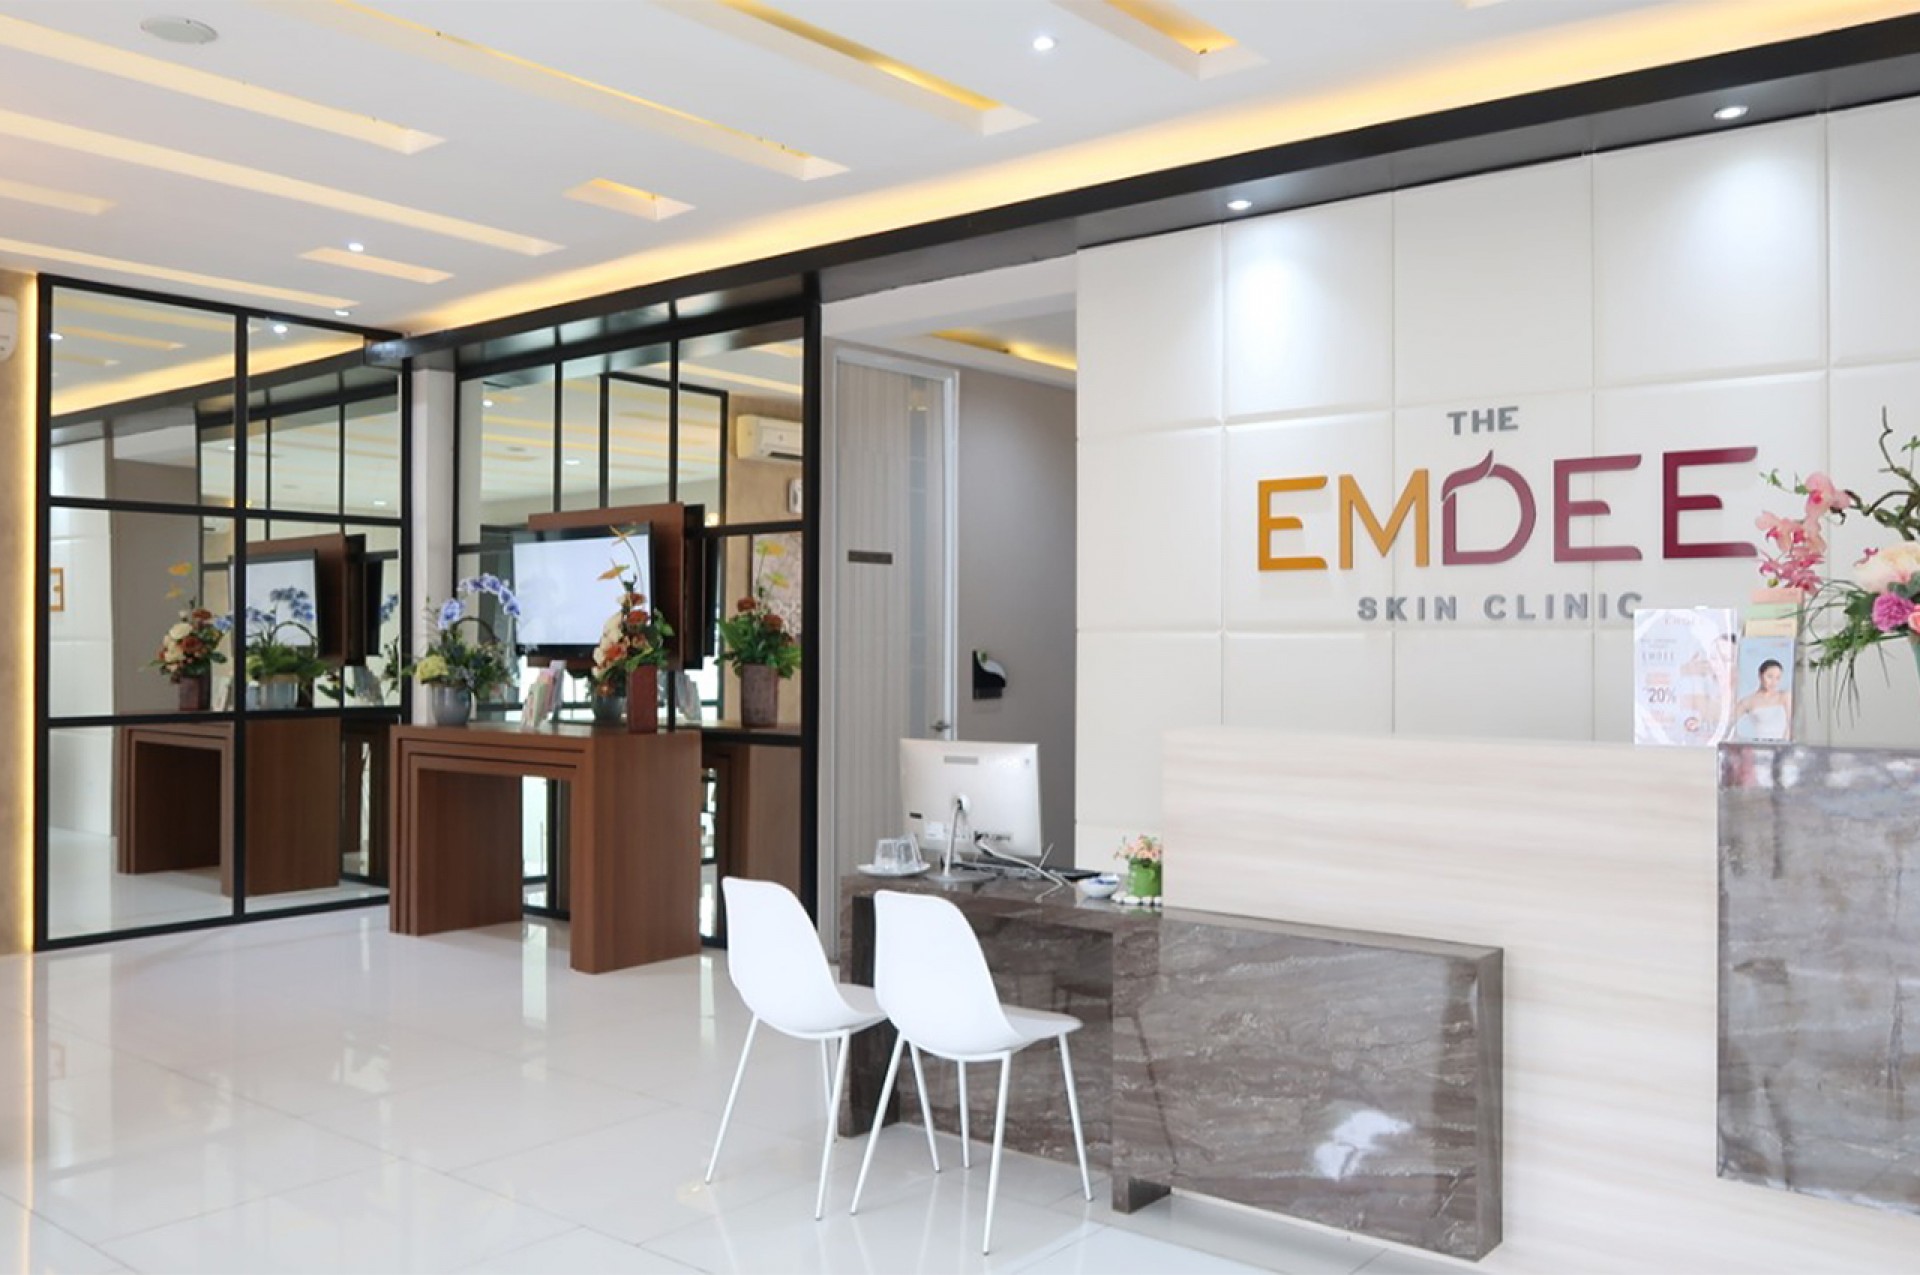 Emdee - Skin Clinic